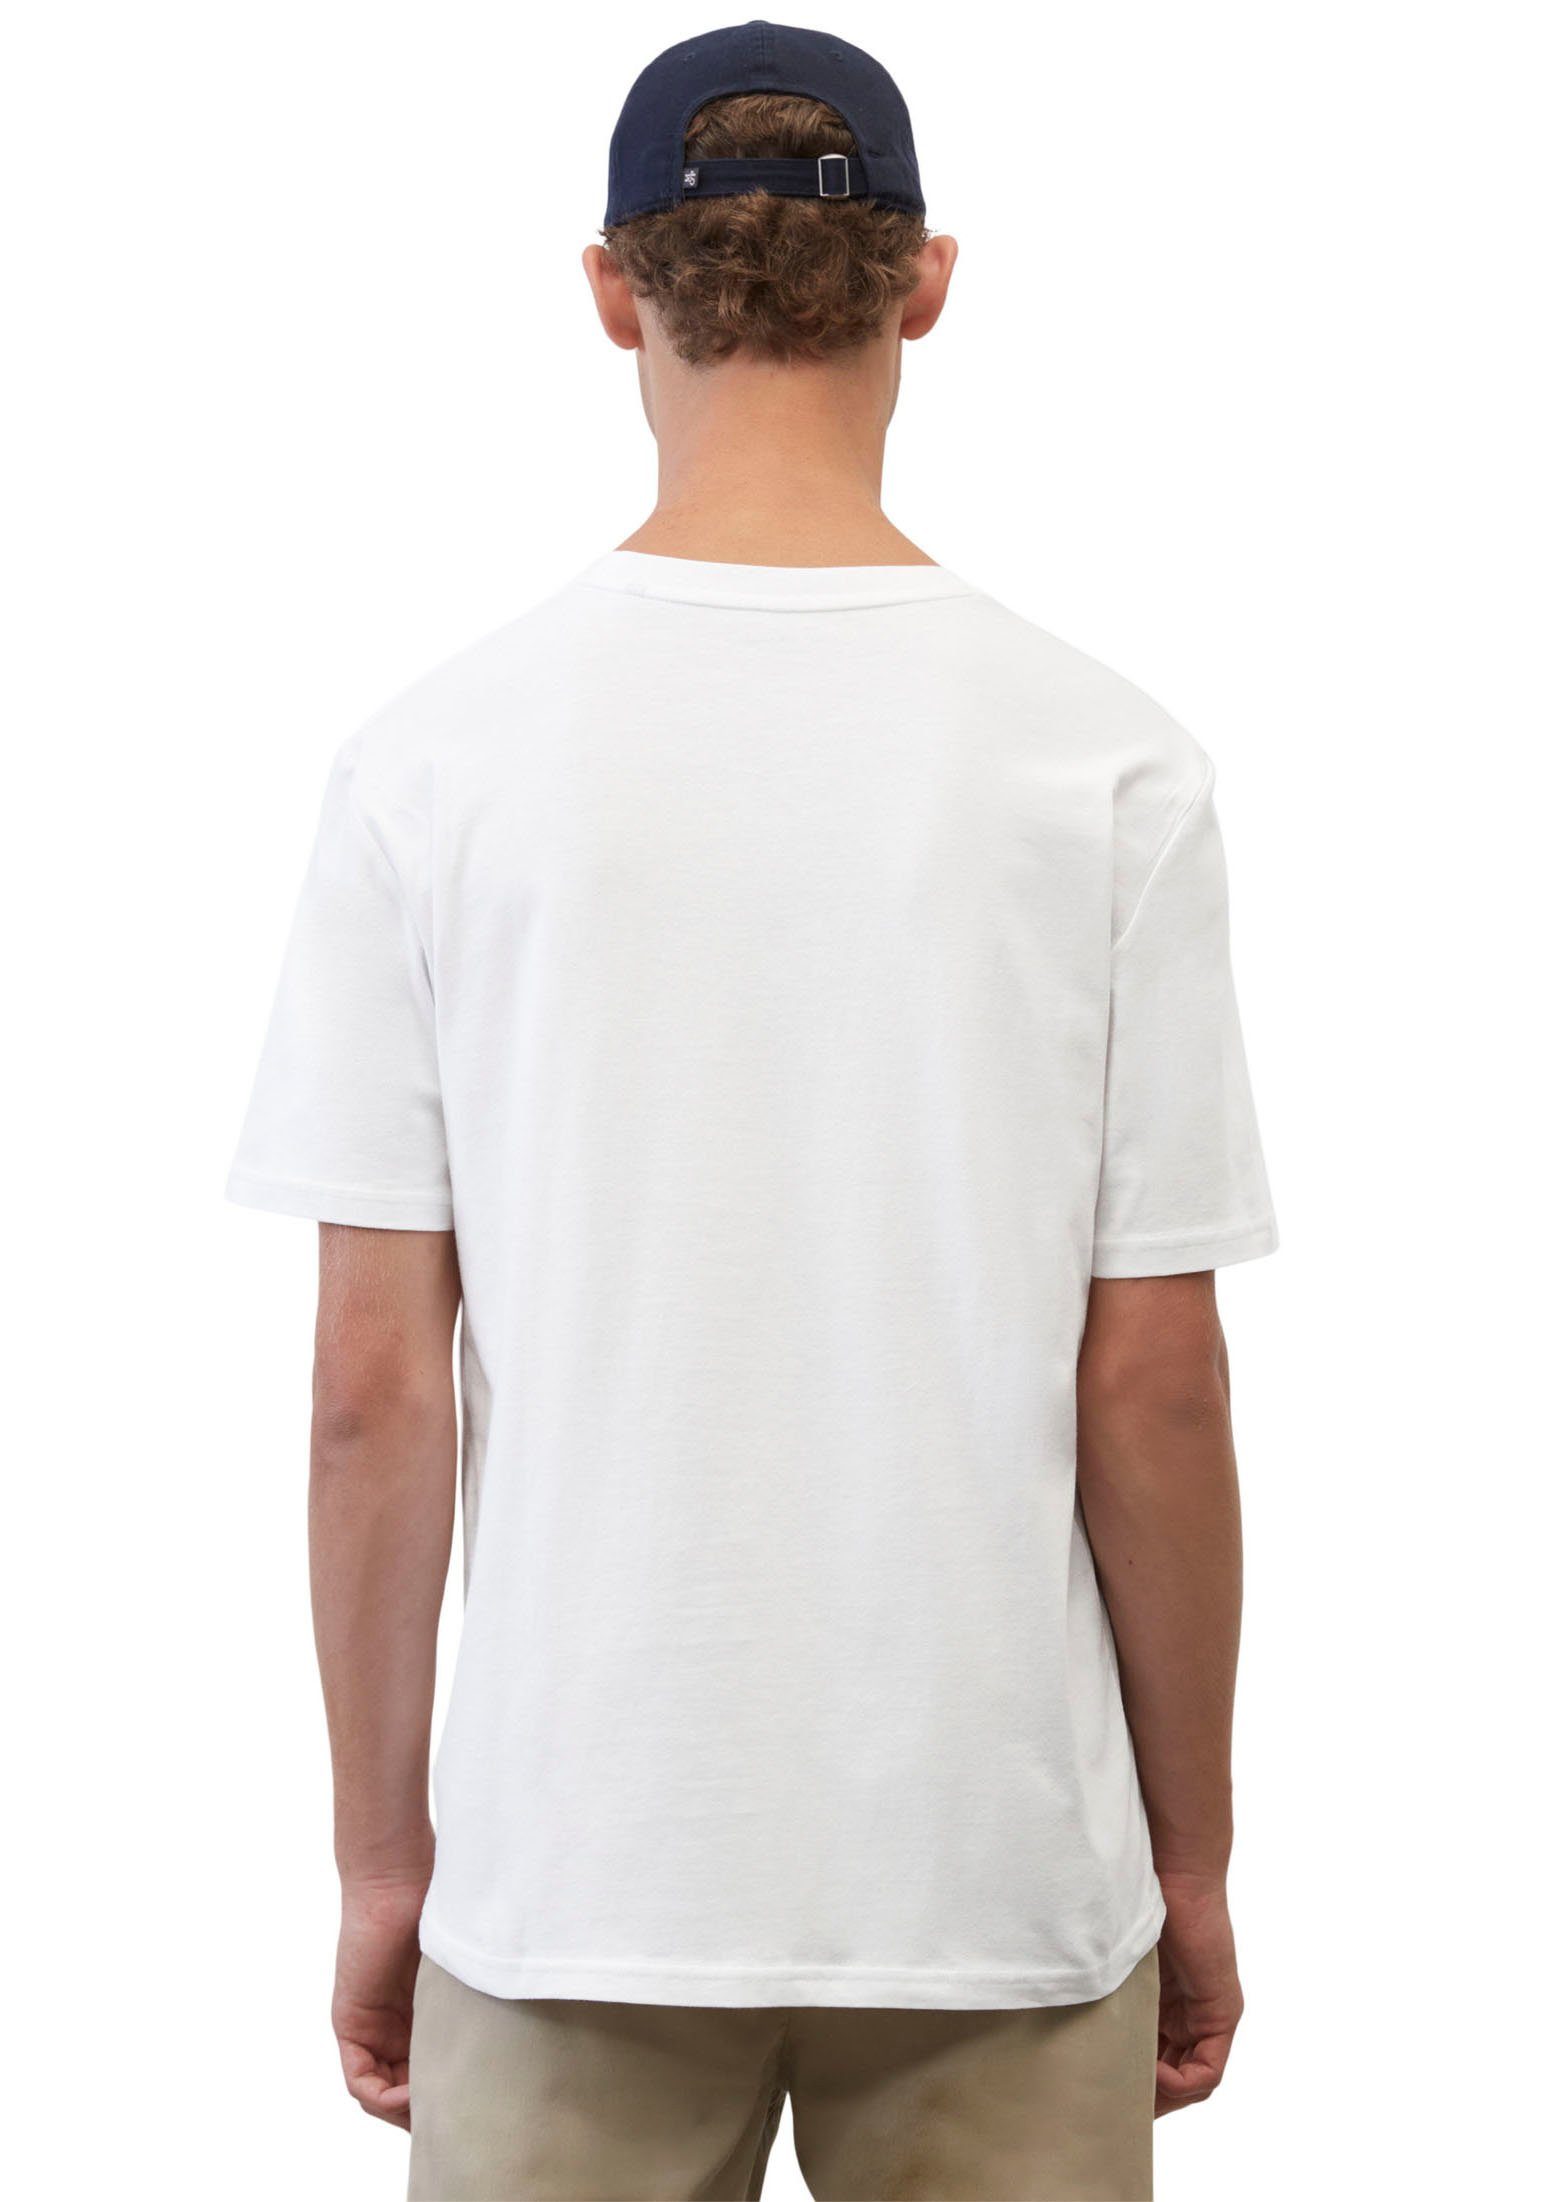 Marc O'Polo T-Shirt klassisches Logo-T-Shirt weiß